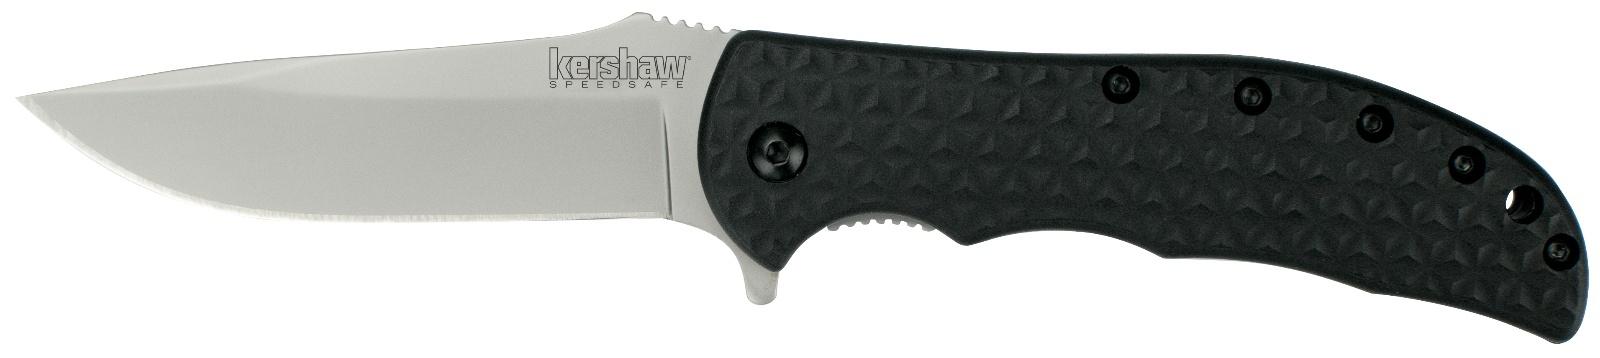 Kershaw Volt II With Pocket Clip Knife